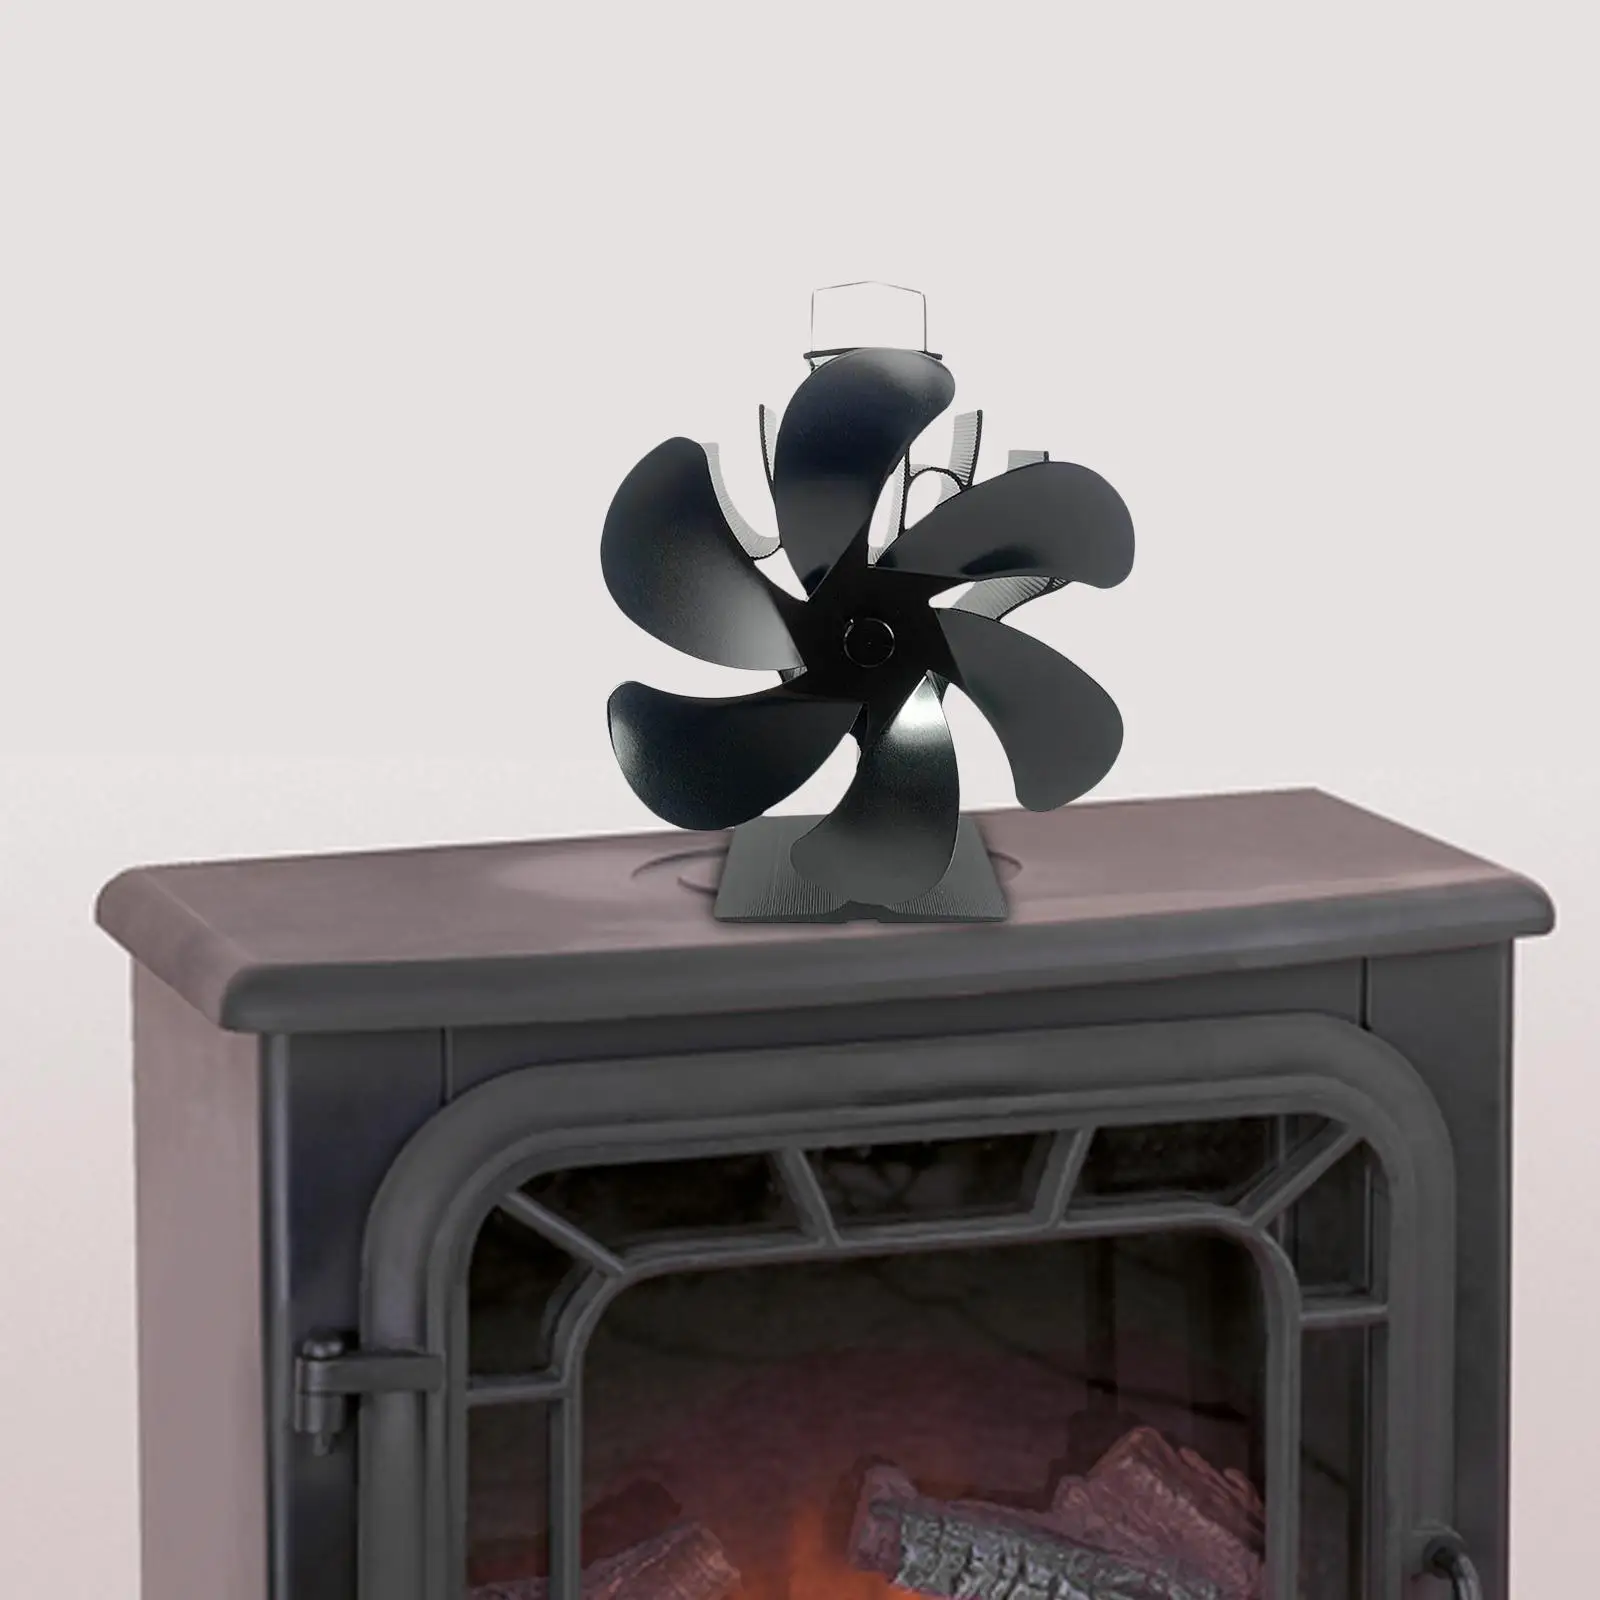 Heat Powered Fireplace Fan Silent Fire Stoves Top Fan Burner Fireplace Fan for Fireplace Heaters Picnics Wood/log Burner